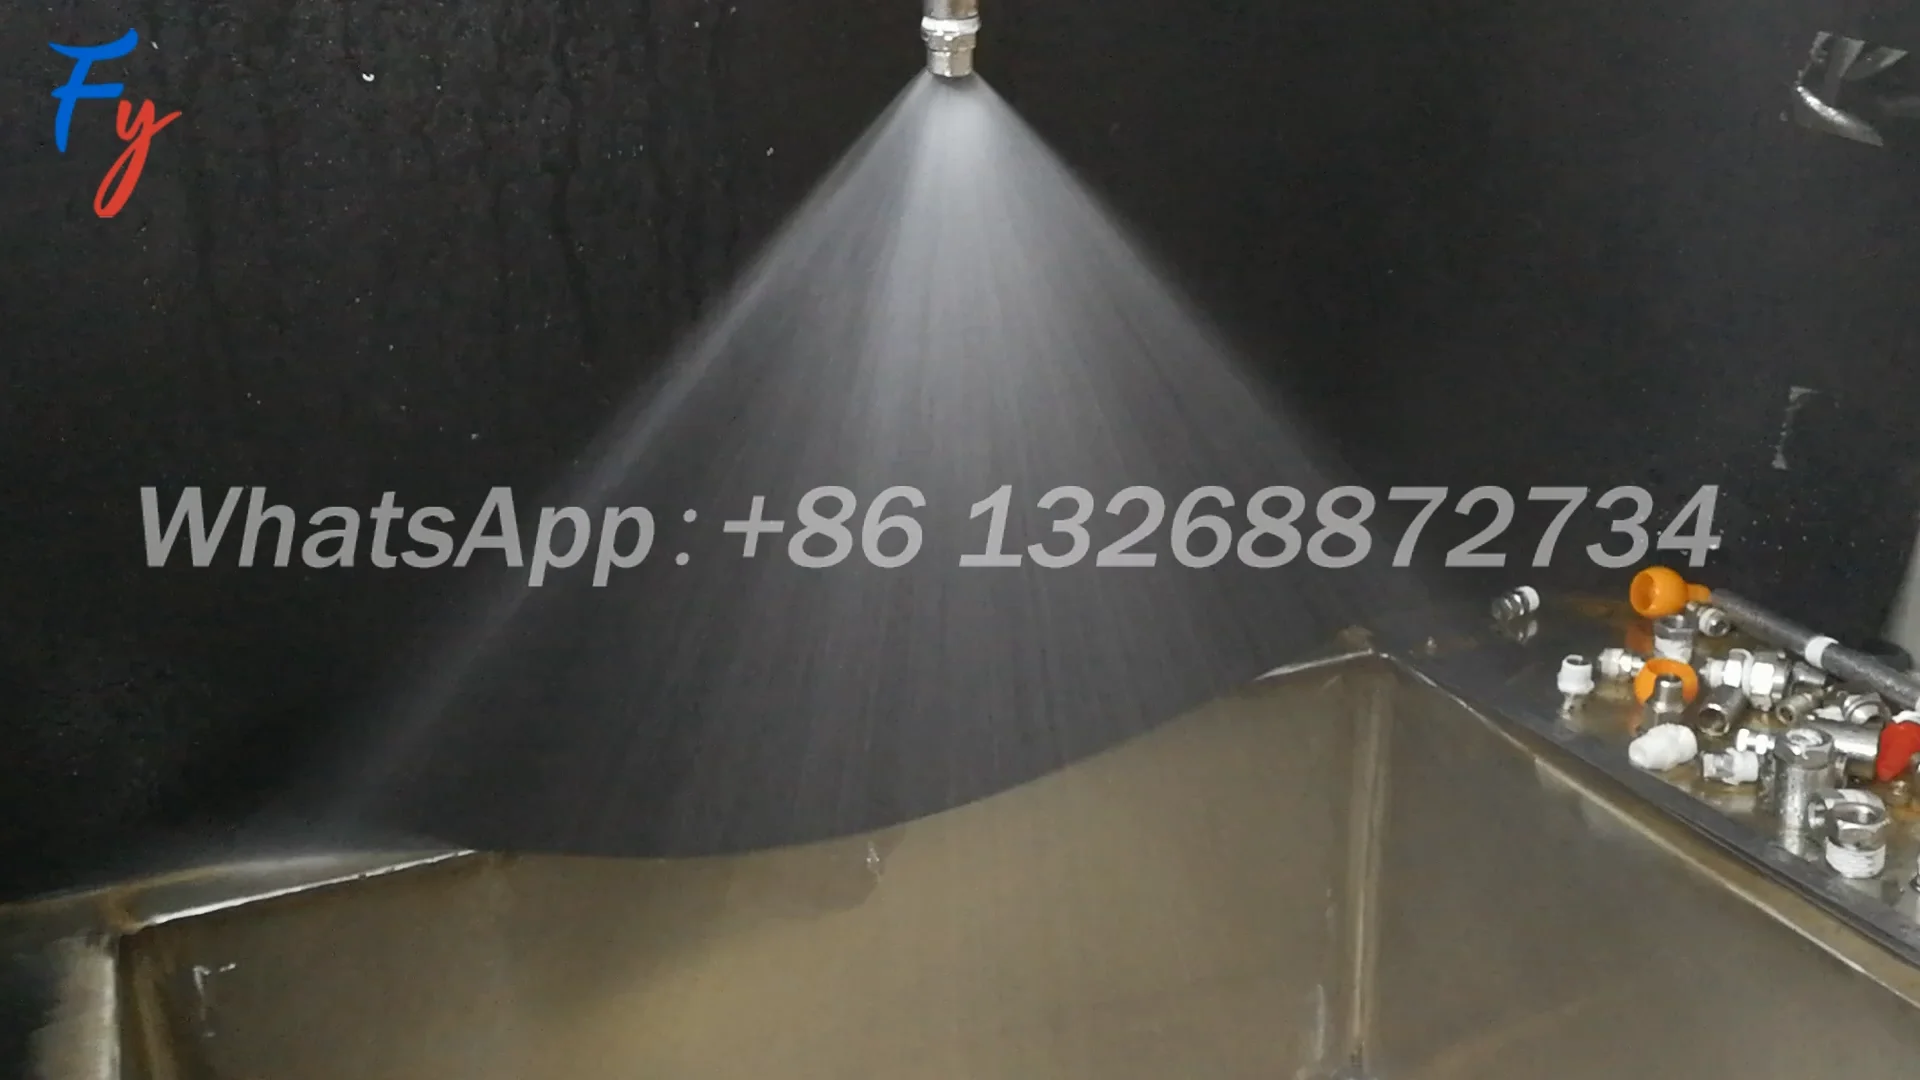 1/4 inch metal v jet flat fan spray nozzle specific industrial washing tooOFCA 